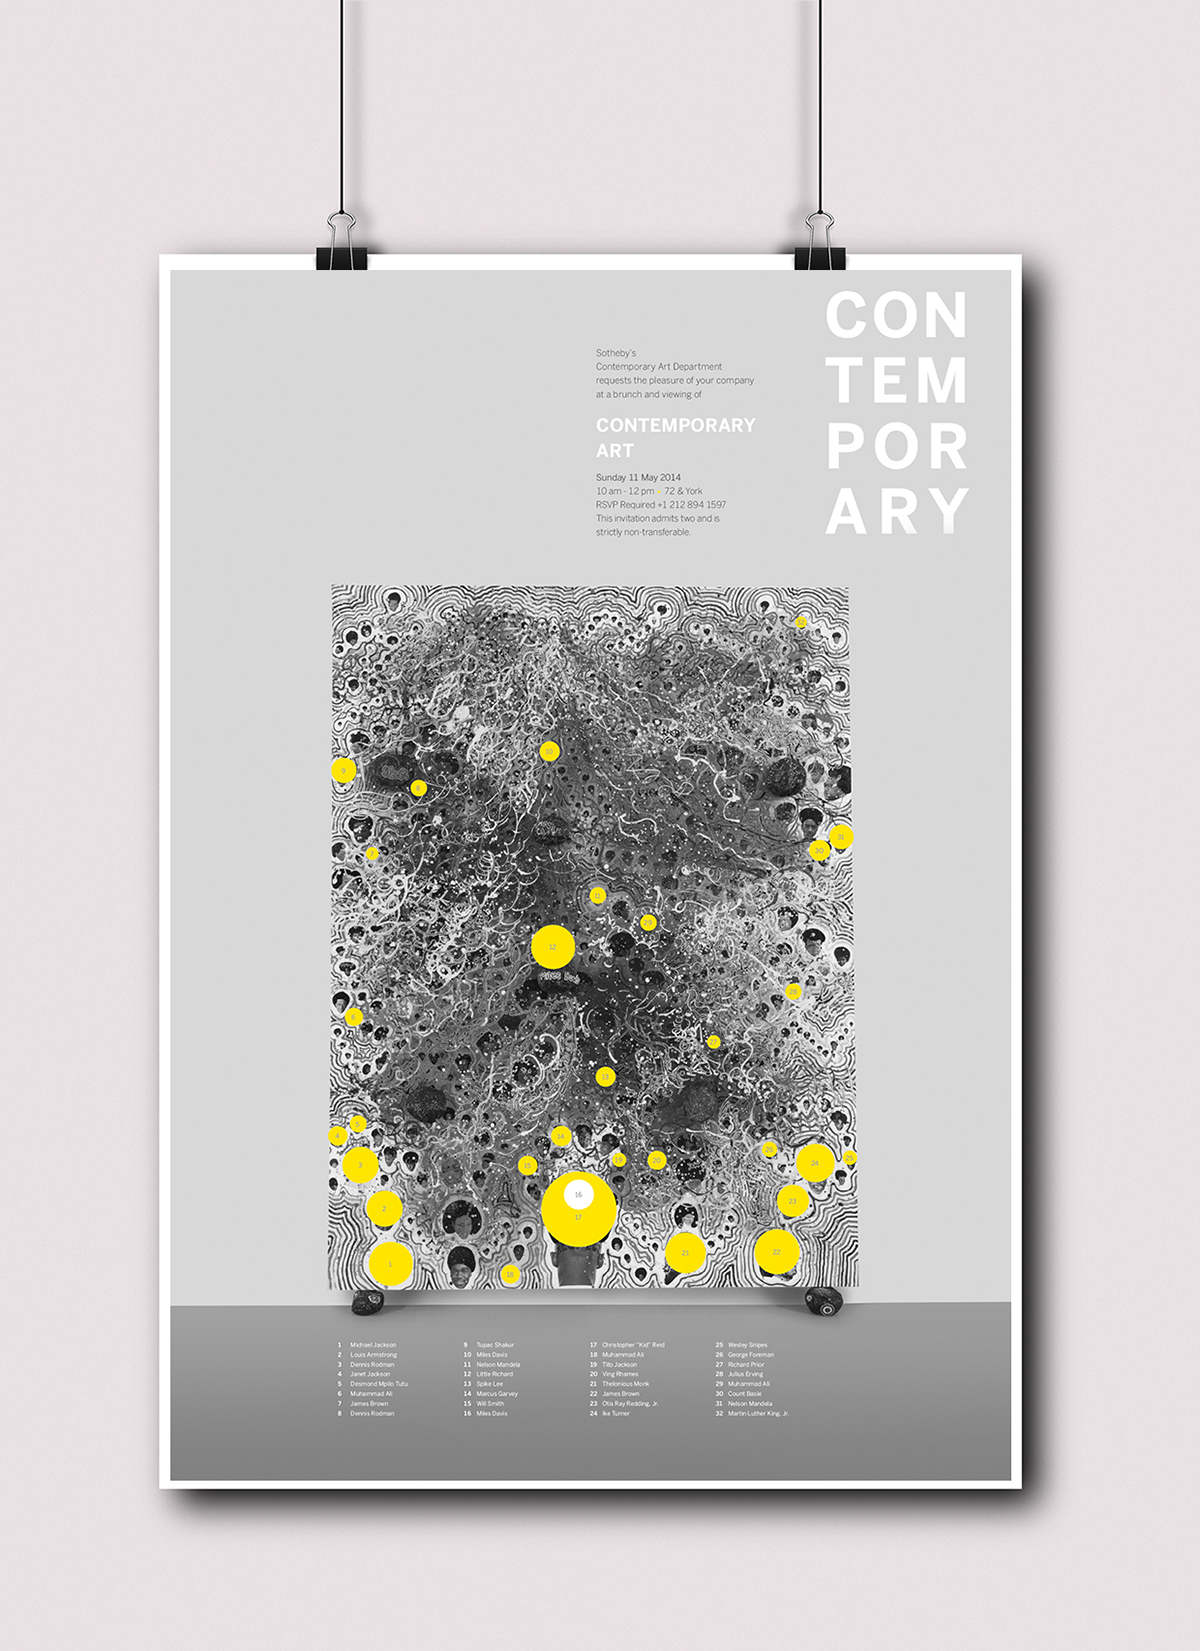 infographic poster invite contemporary art Jeff Koons chris ofili